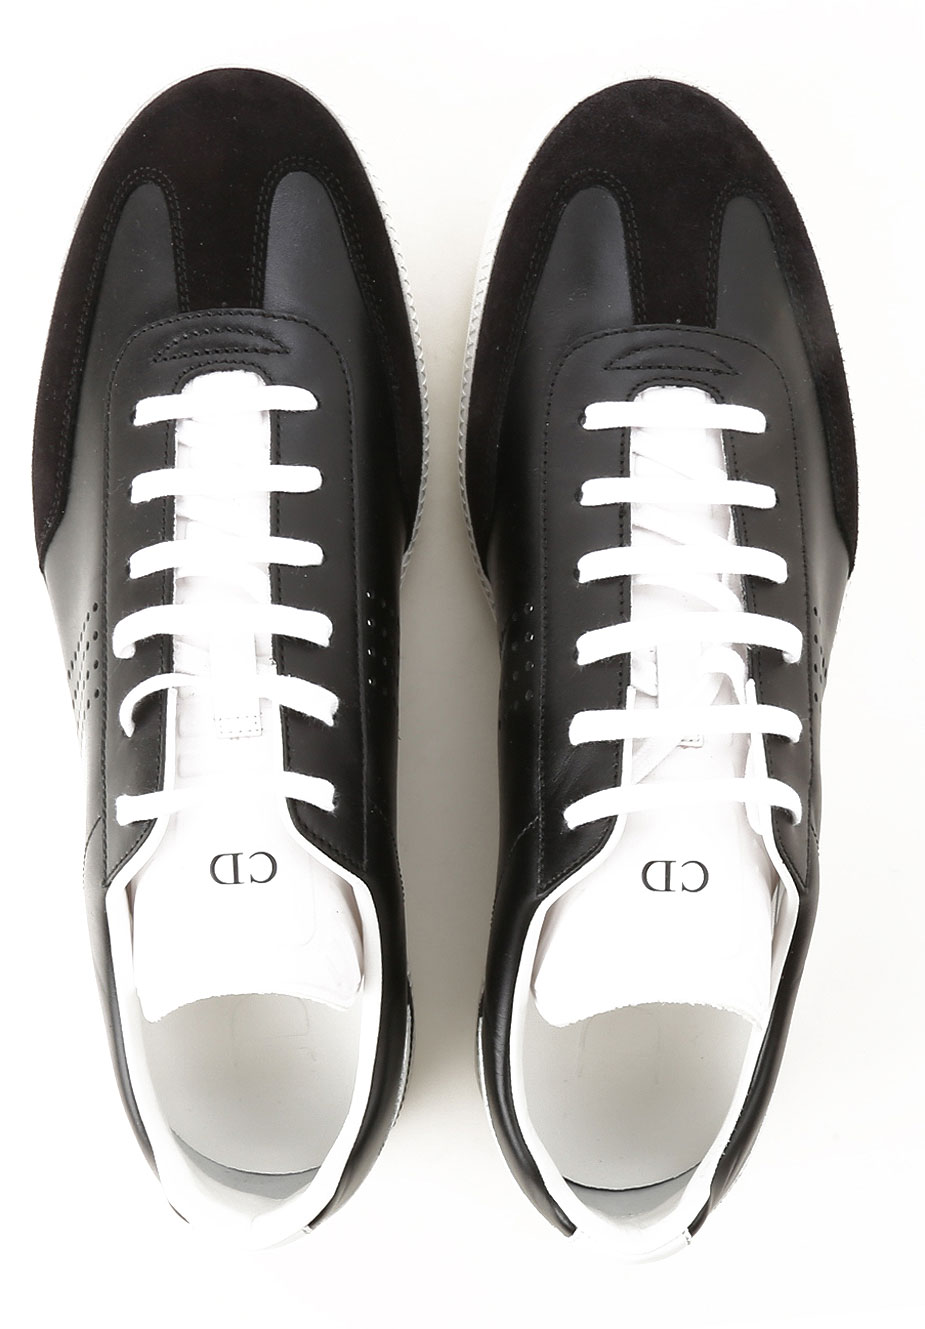 Mens Shoes Christian Dior, Style code: 3sn225xzu-960-